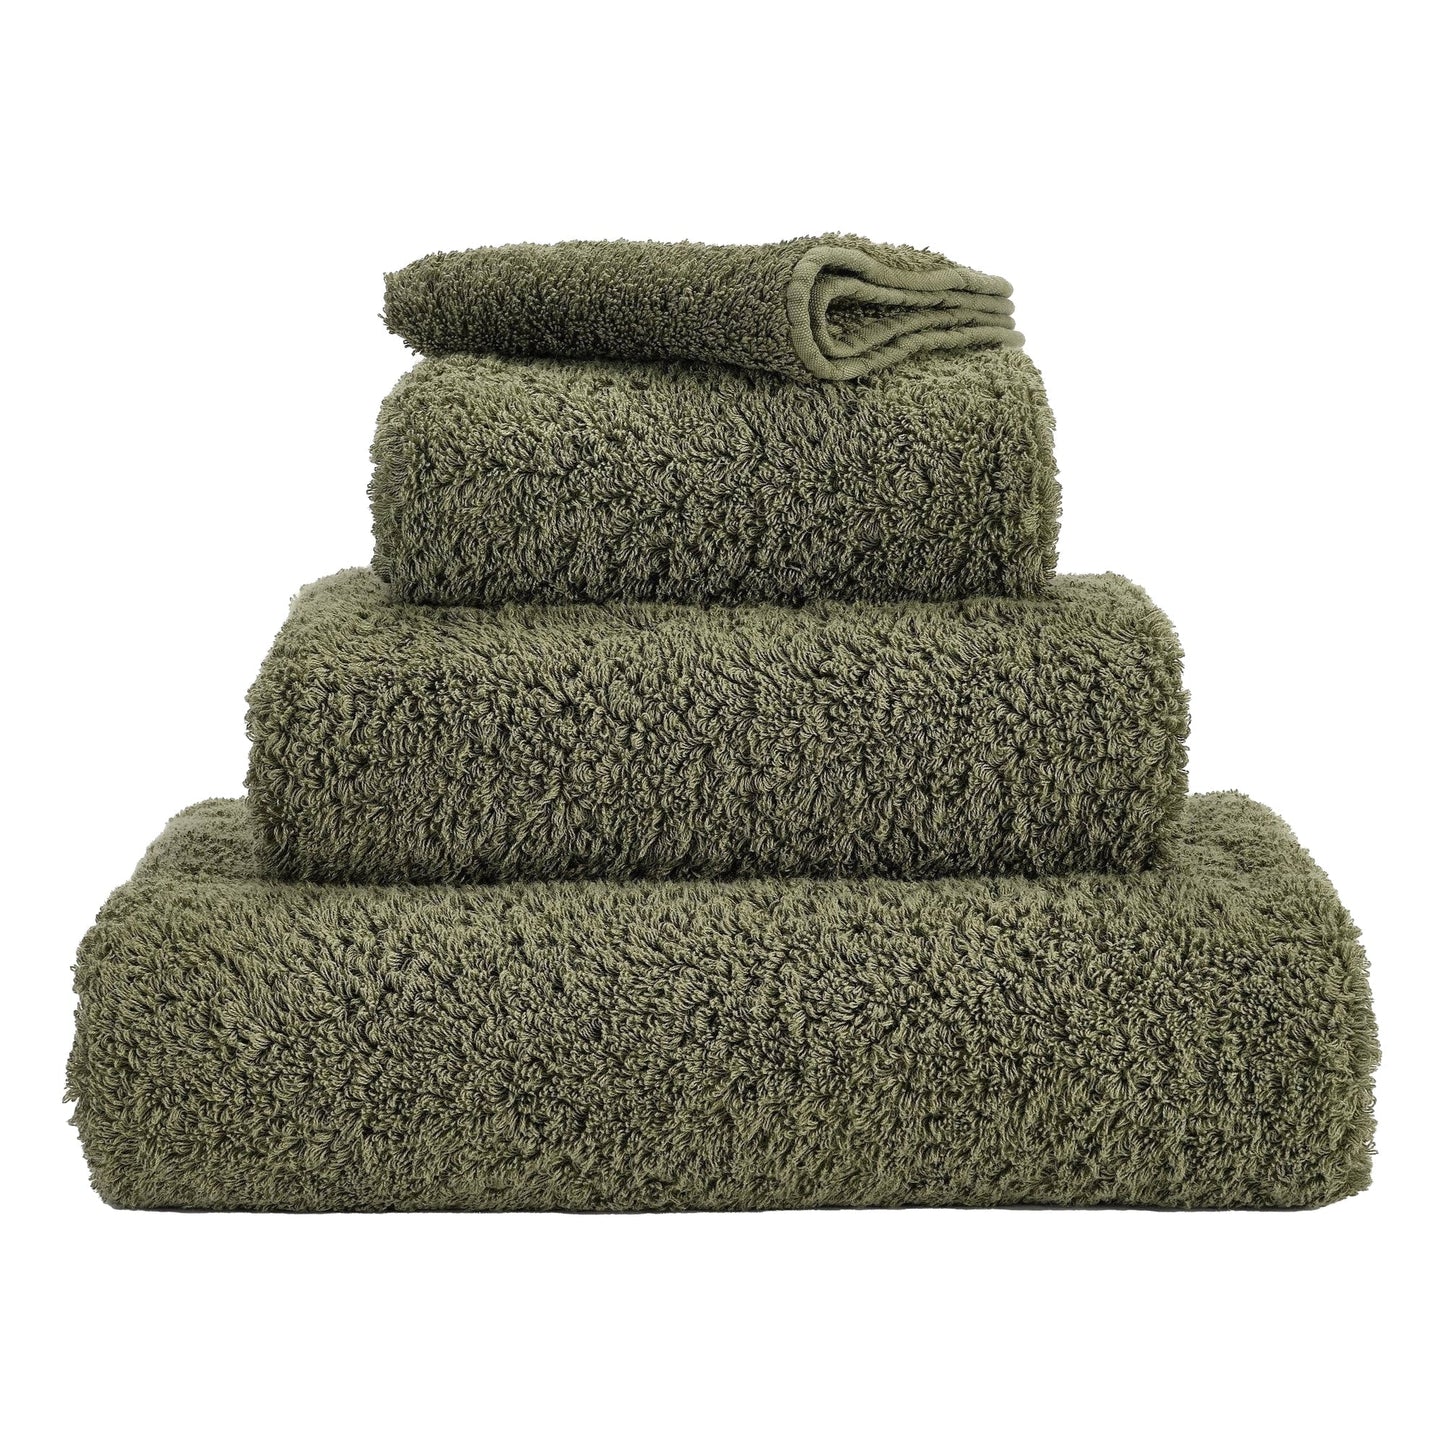 Luxury Super Pile Egyptian Cotton Towel by Abyss & Habidecor | 275 Khaki - |VESIMI Design| Luxury and Rustic bathrooms online